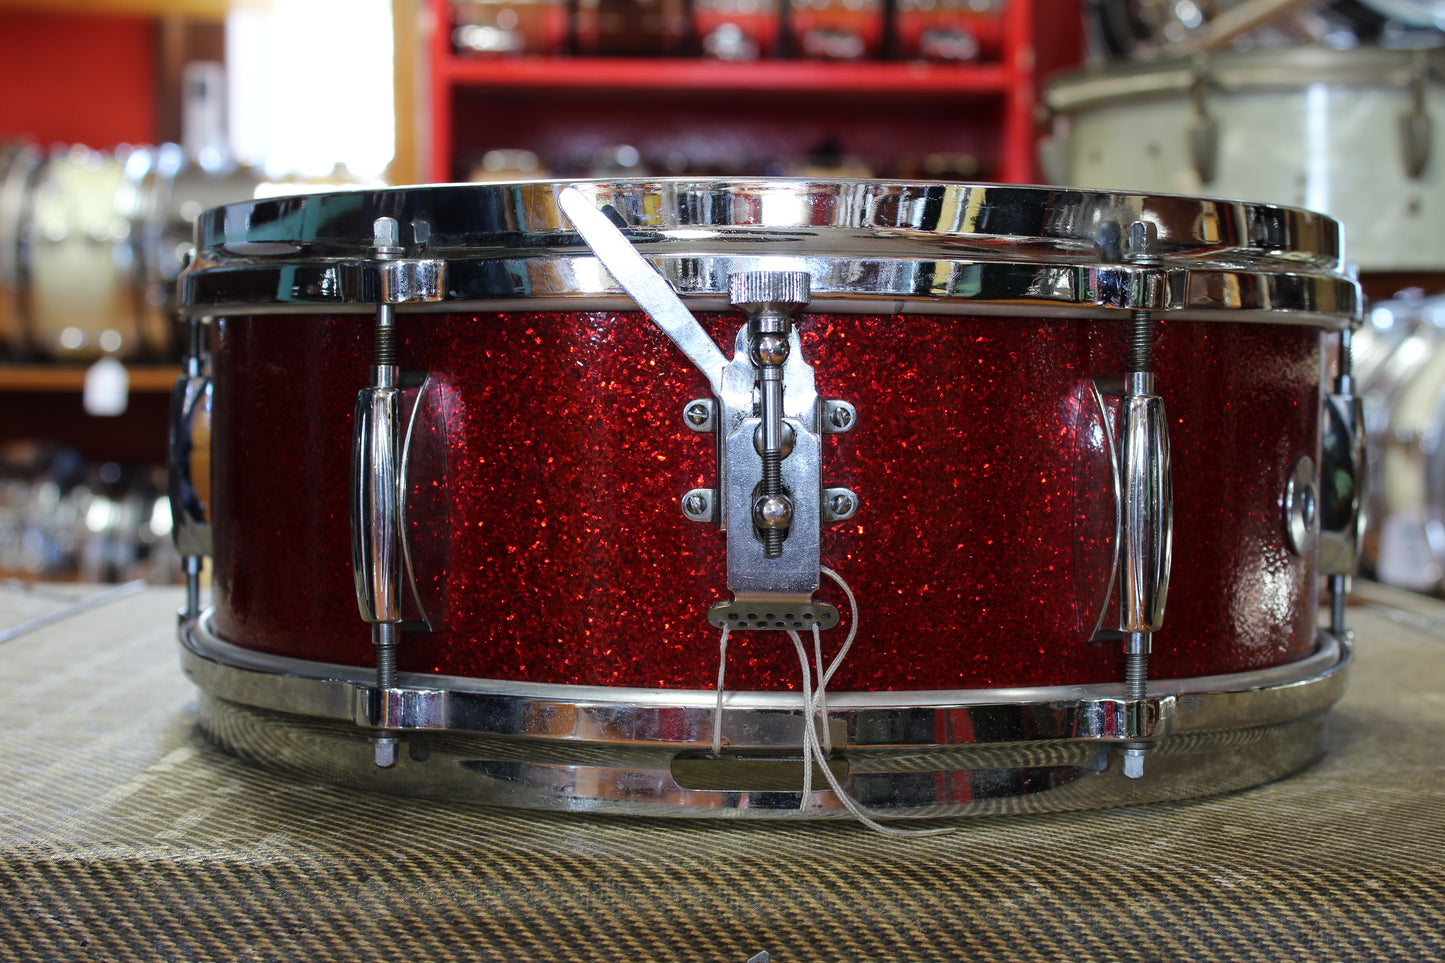 1970 Gretsch Dixieland Snare Drum 5.5x14 in Red Sparkle